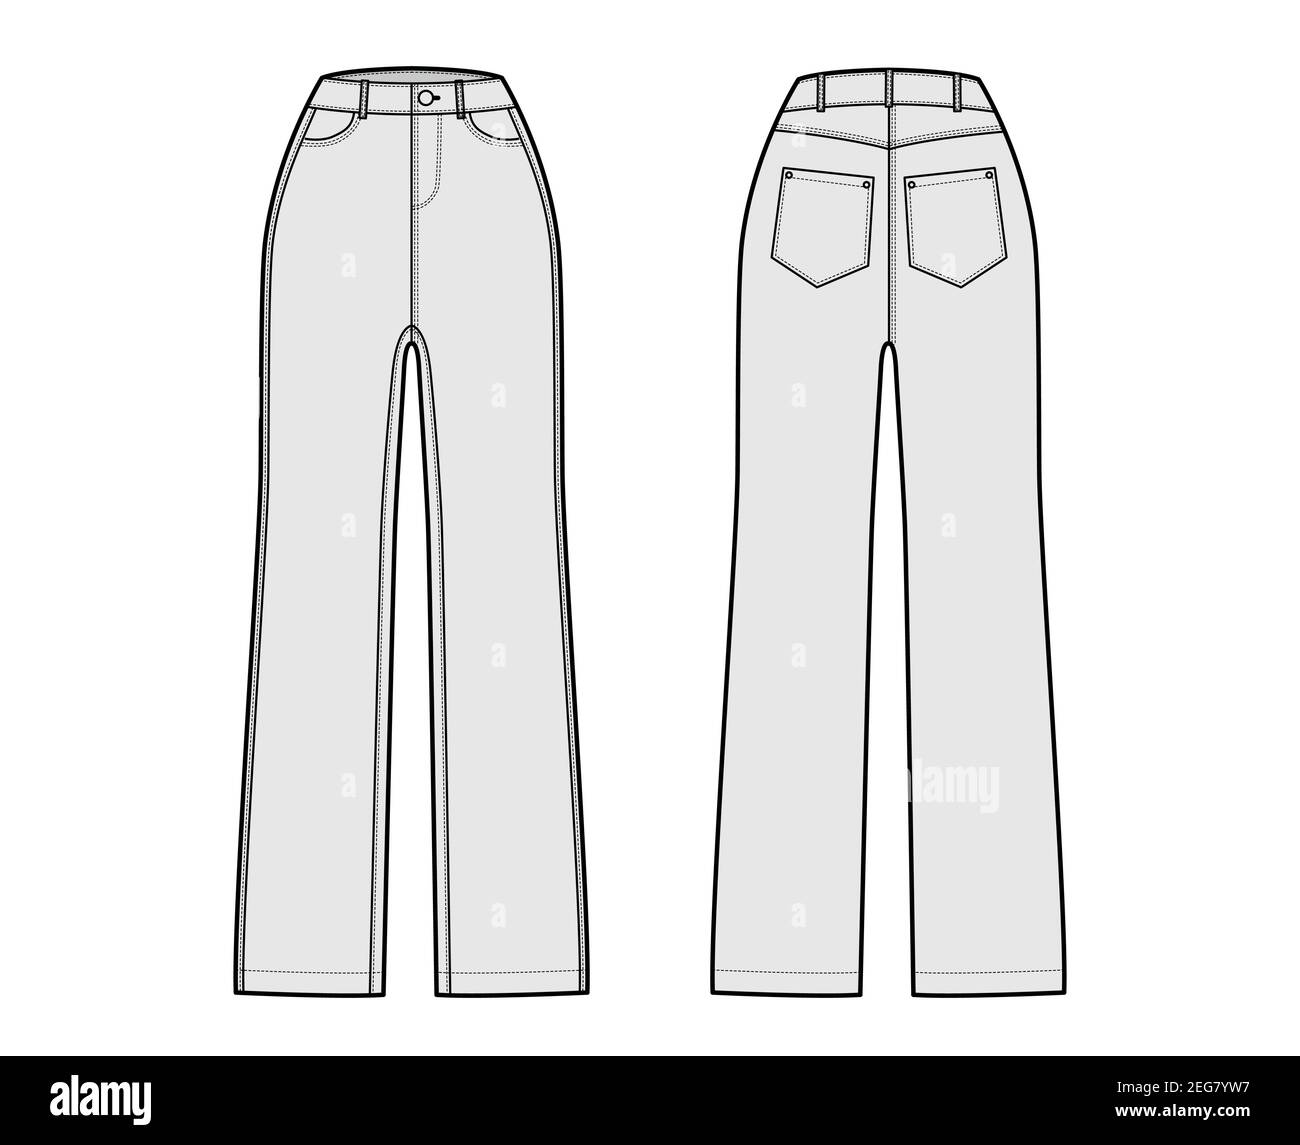 Jeans Denim pants technical fashion illustration with full length, normal  waist, rise, 5 pockets, Rivets, belt